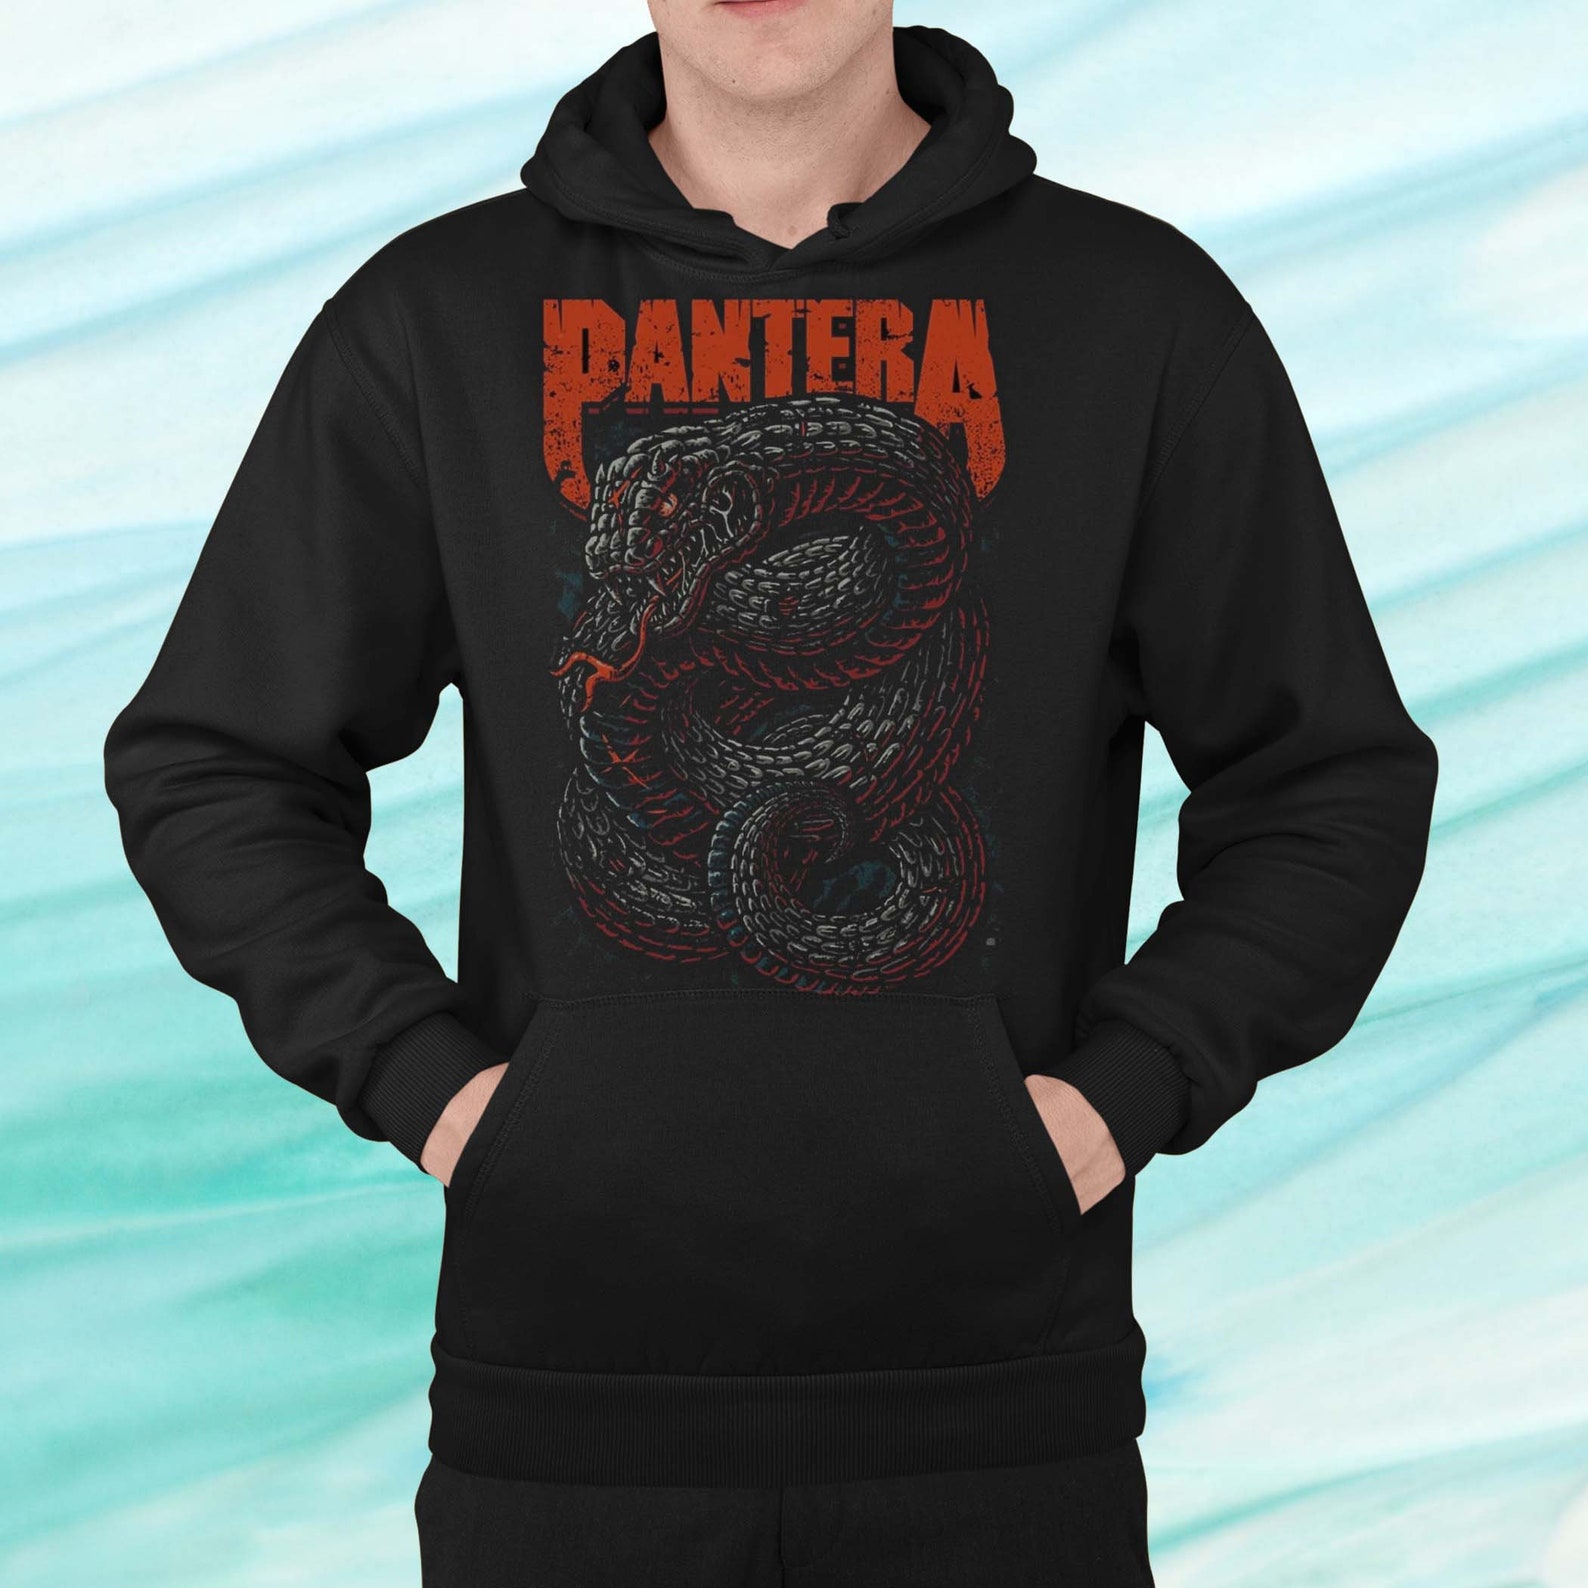 PANTERA shirt for men and women PANTERA Snake shirt PANTERA | Etsy